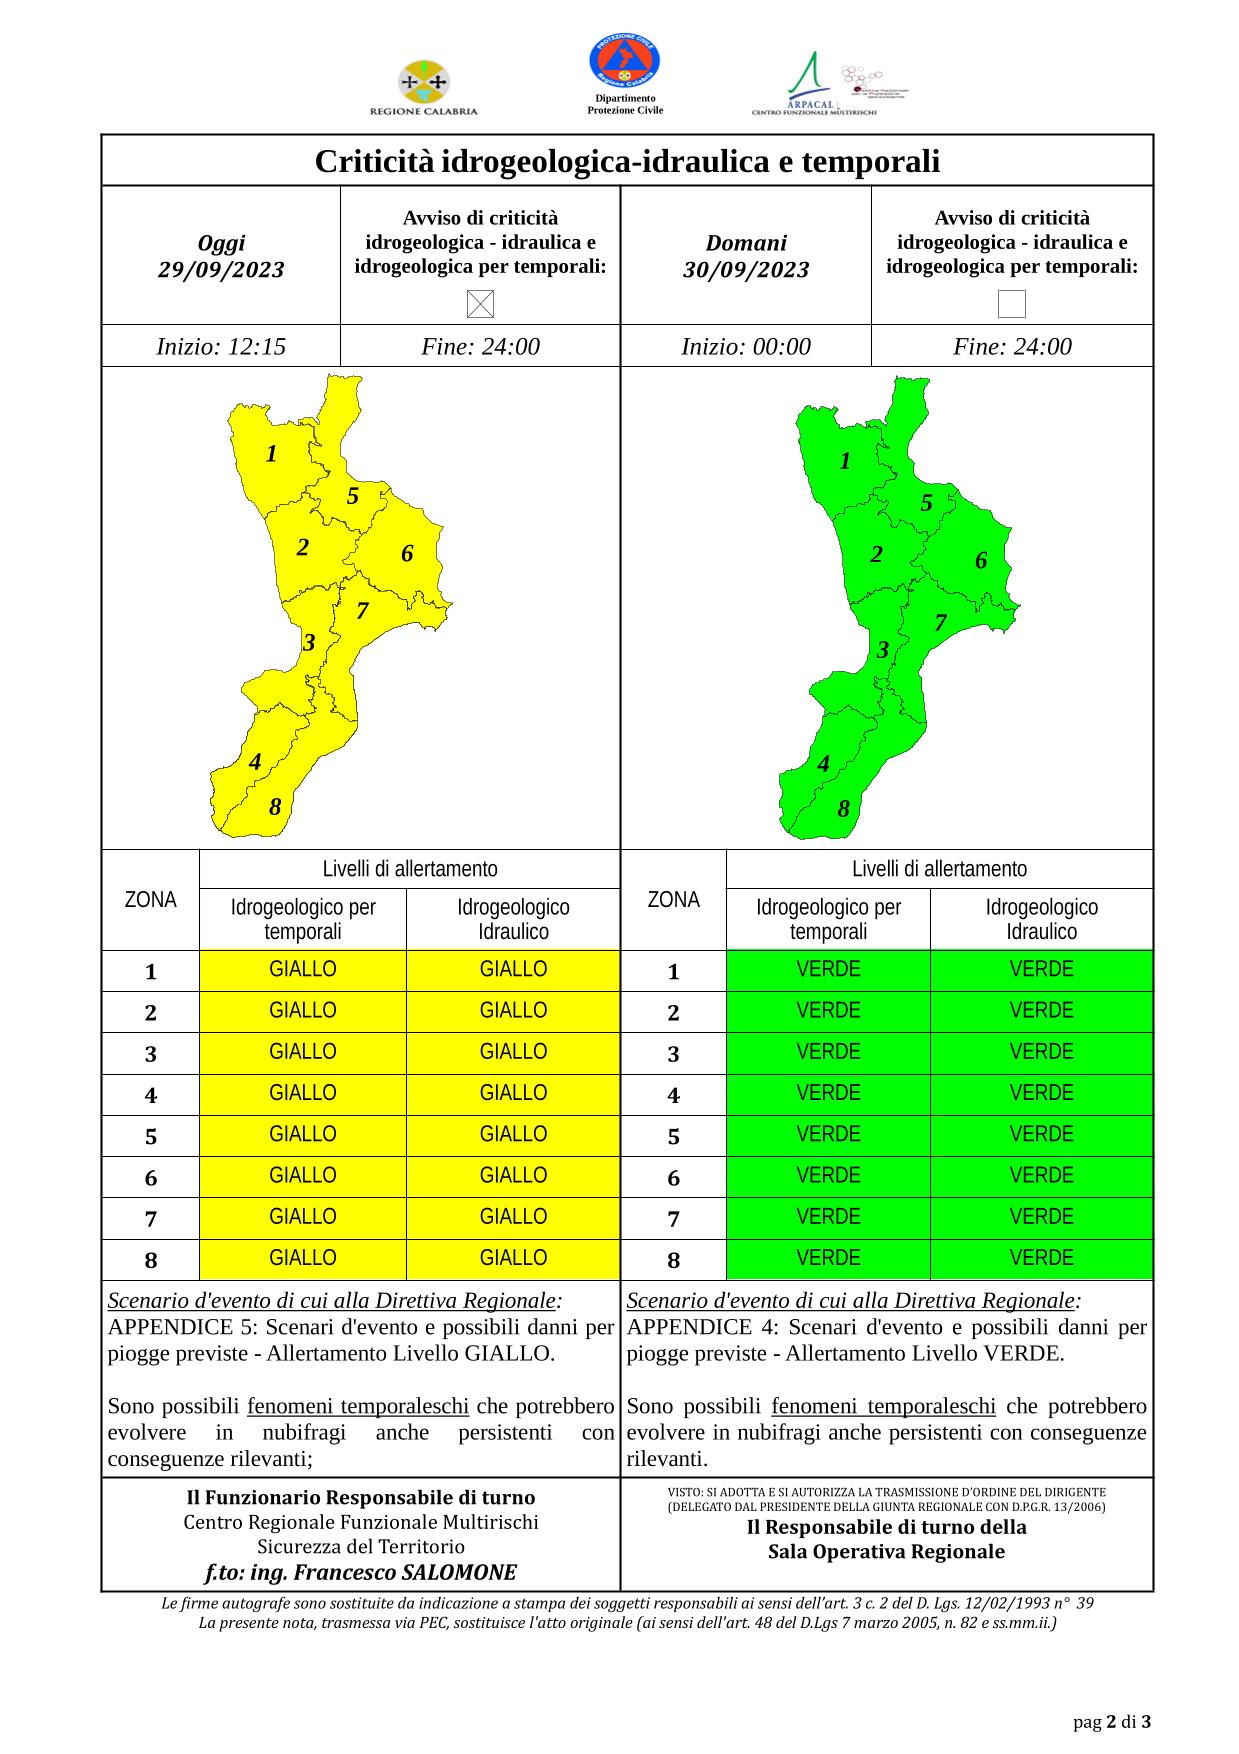 Criticità idrogeologica-idraulica e temporali in Calabria 29-09-2023